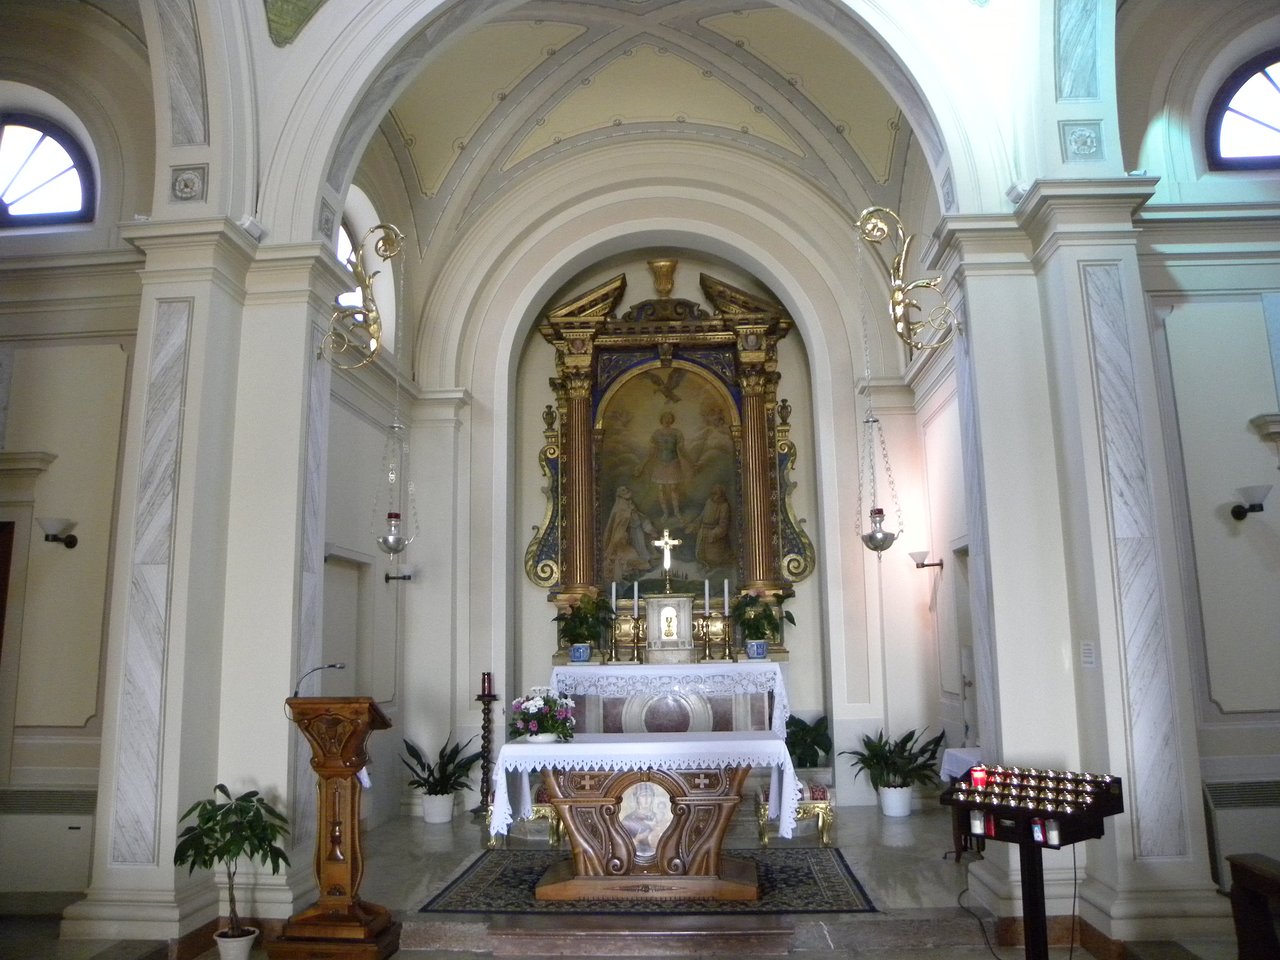 Chiesa di San Floriano